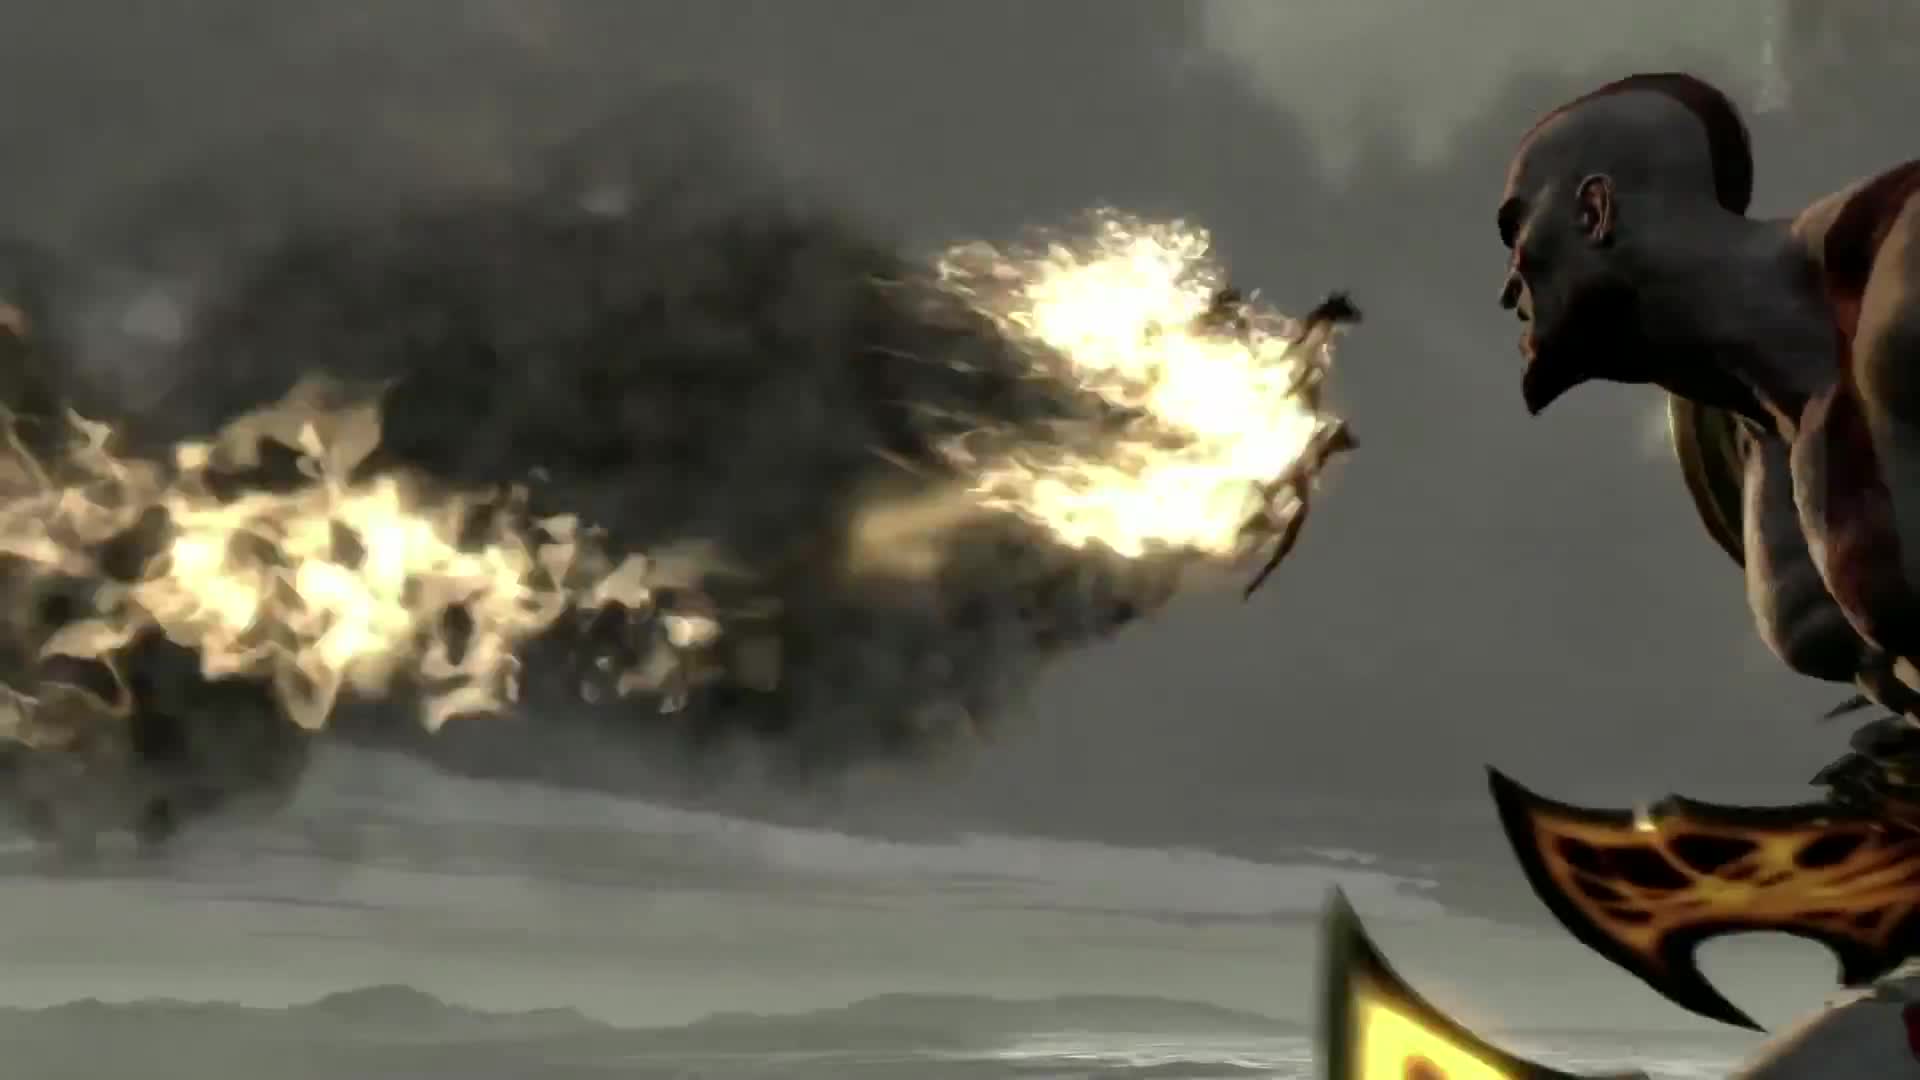 God of War III - PS4 remaster trailer